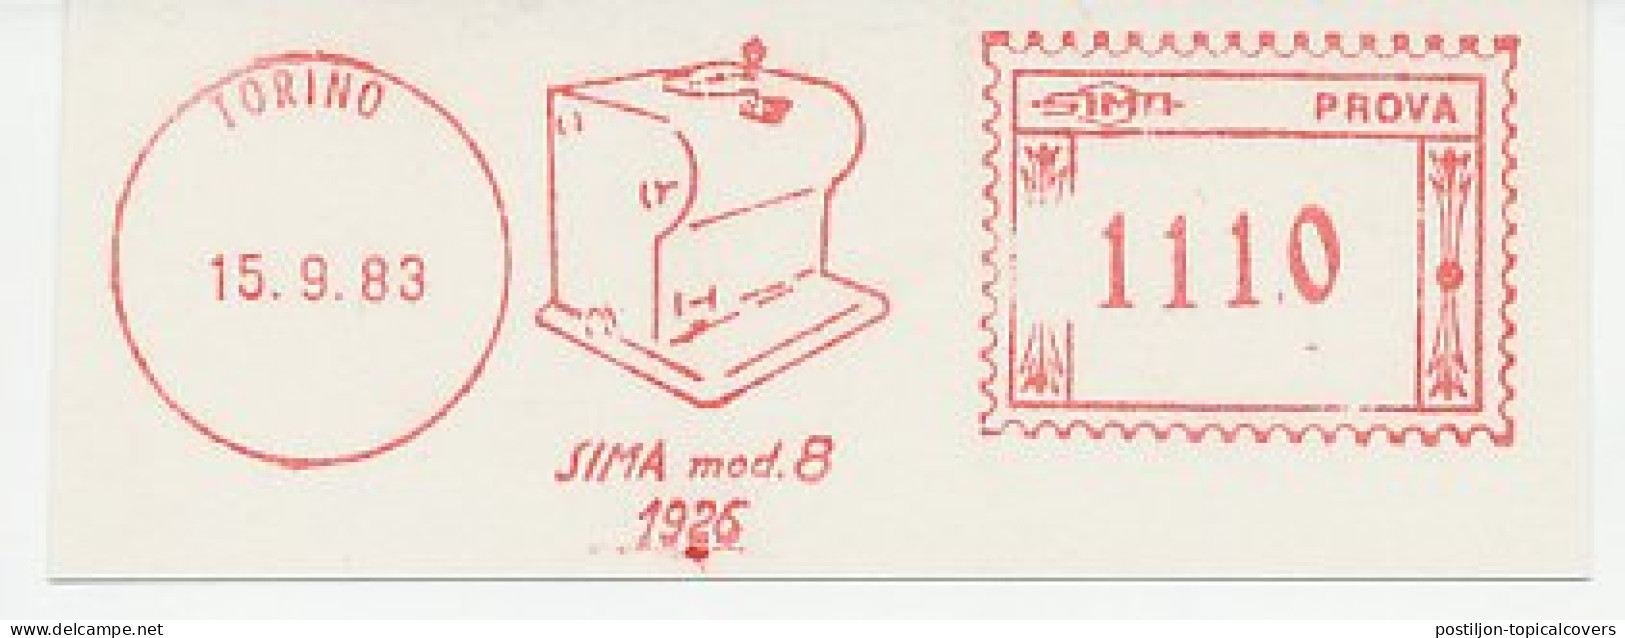 Proof Meter Cut Italy 1983 Sima - Mod. 8 1926 - Automaatzegels [ATM]